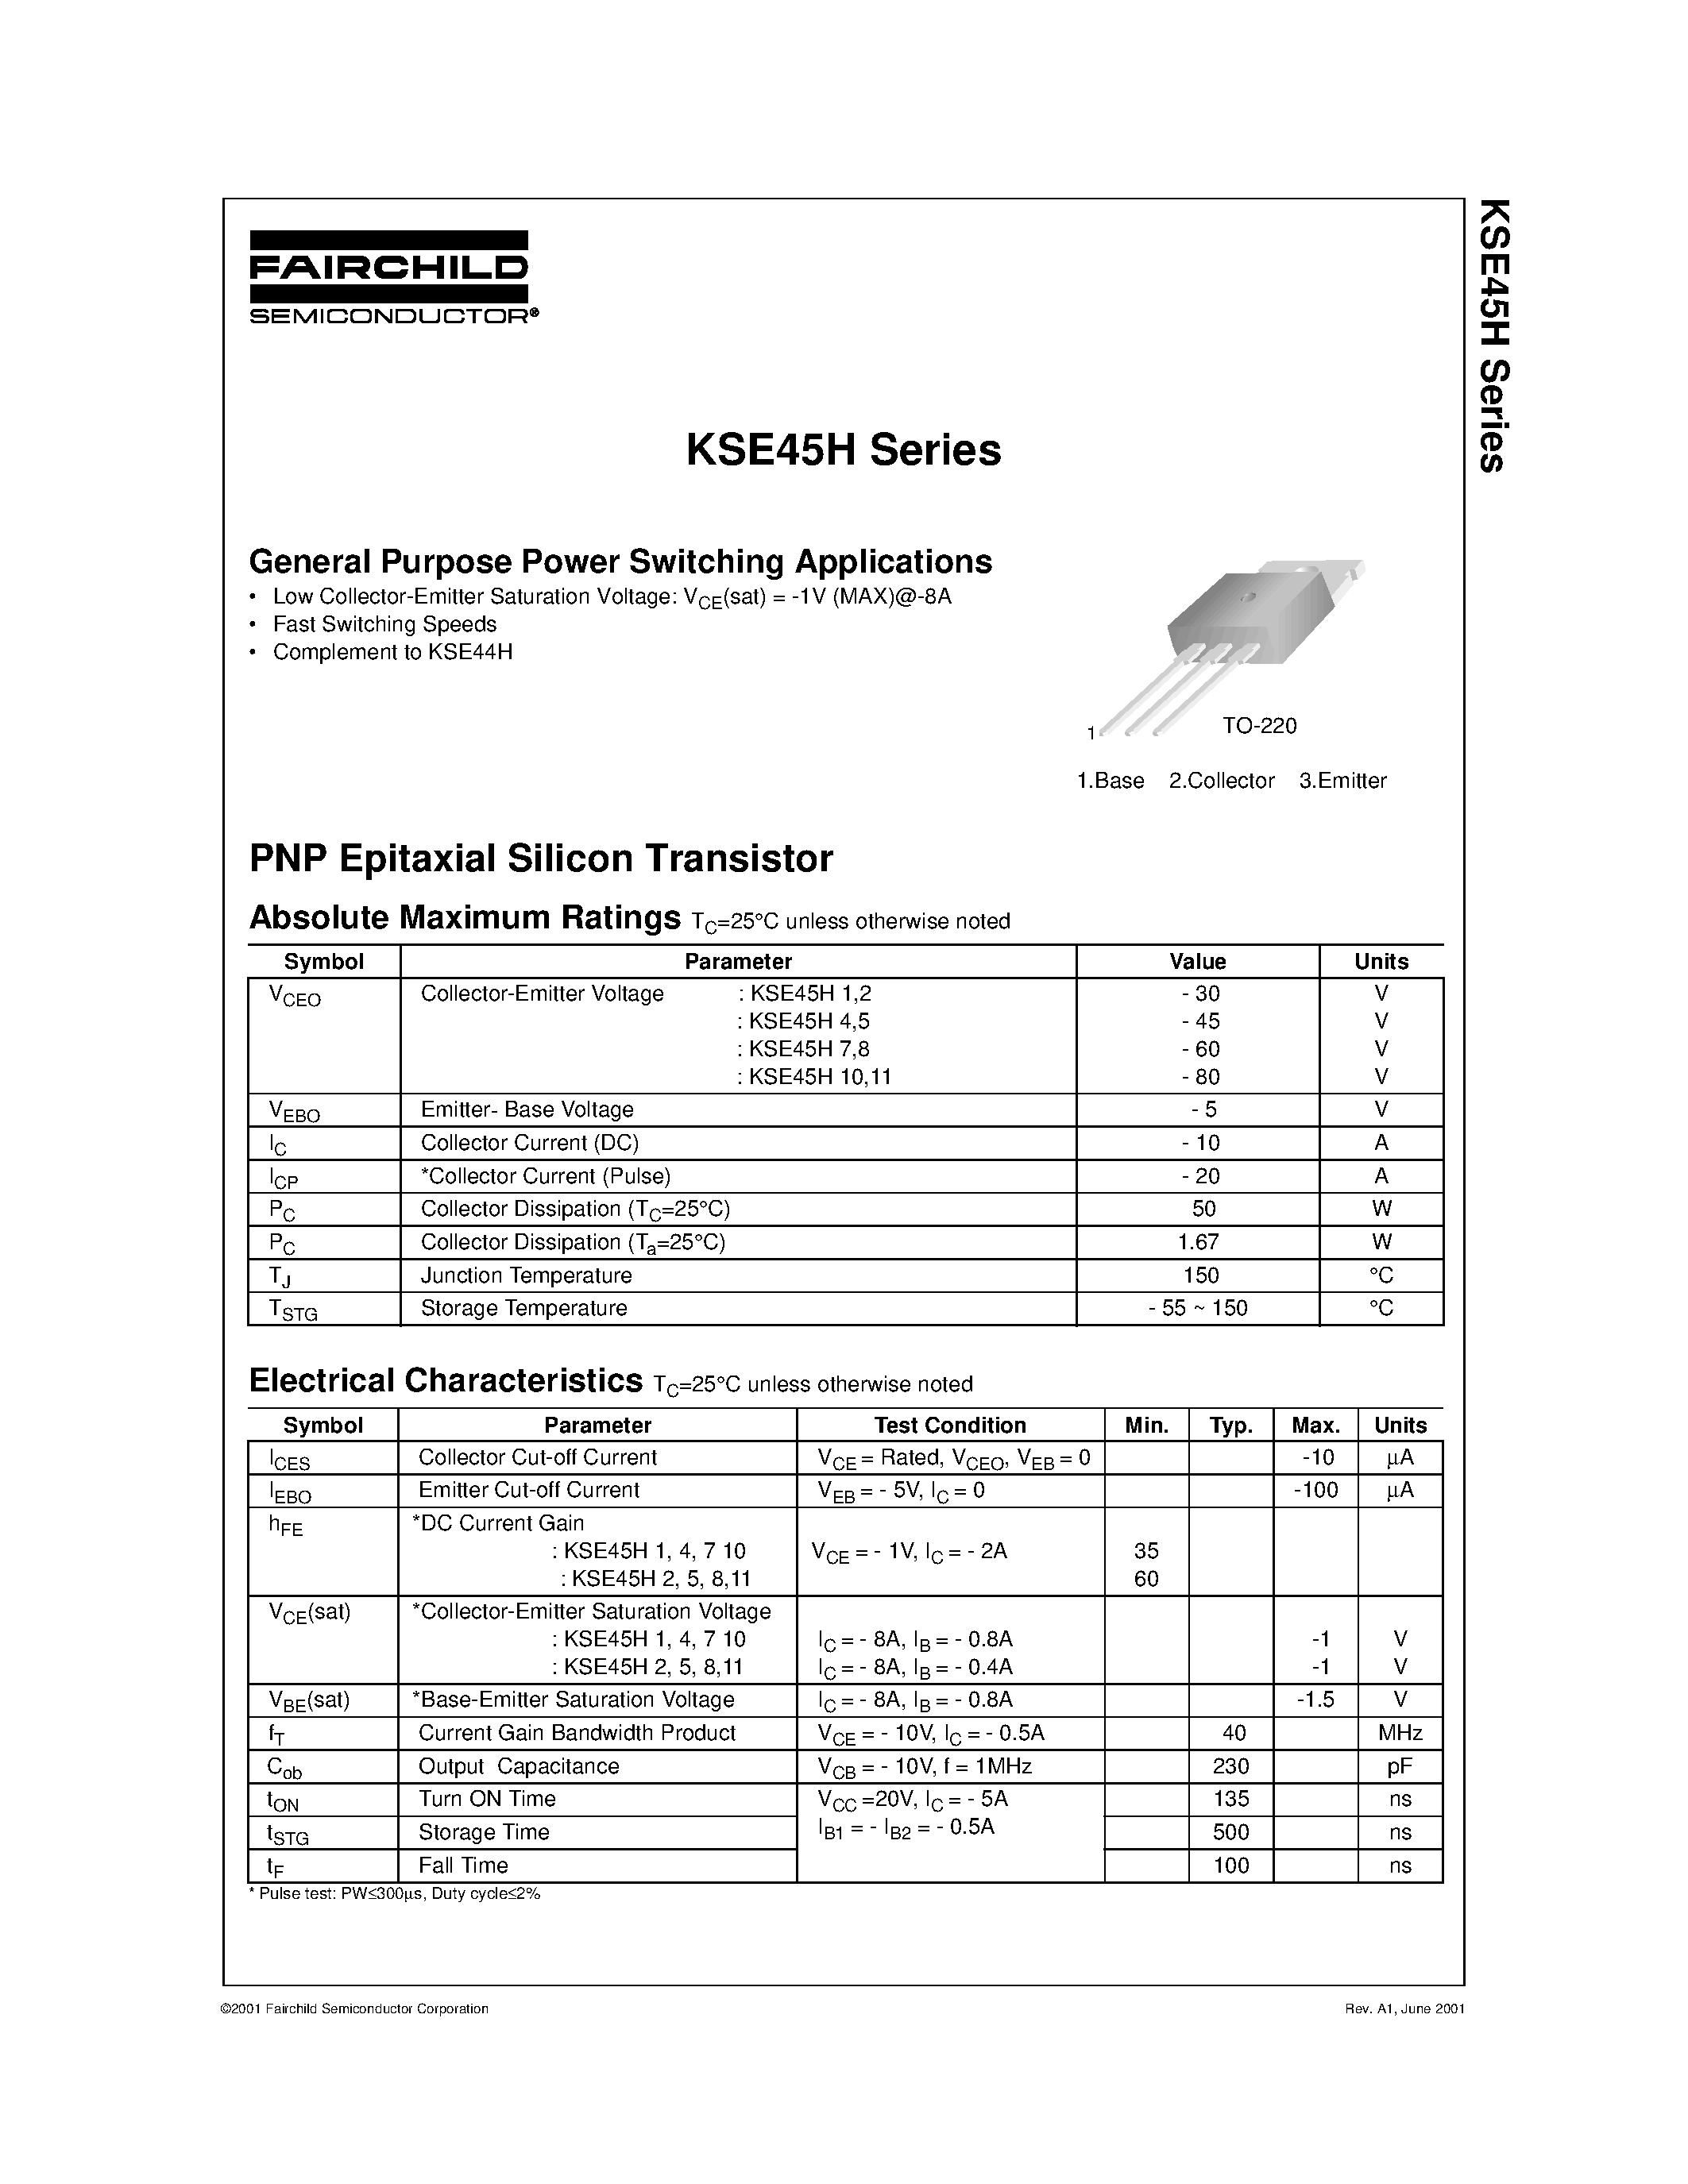 Datasheet KSE45H7 - General Purpose Power Switching Applications page 1